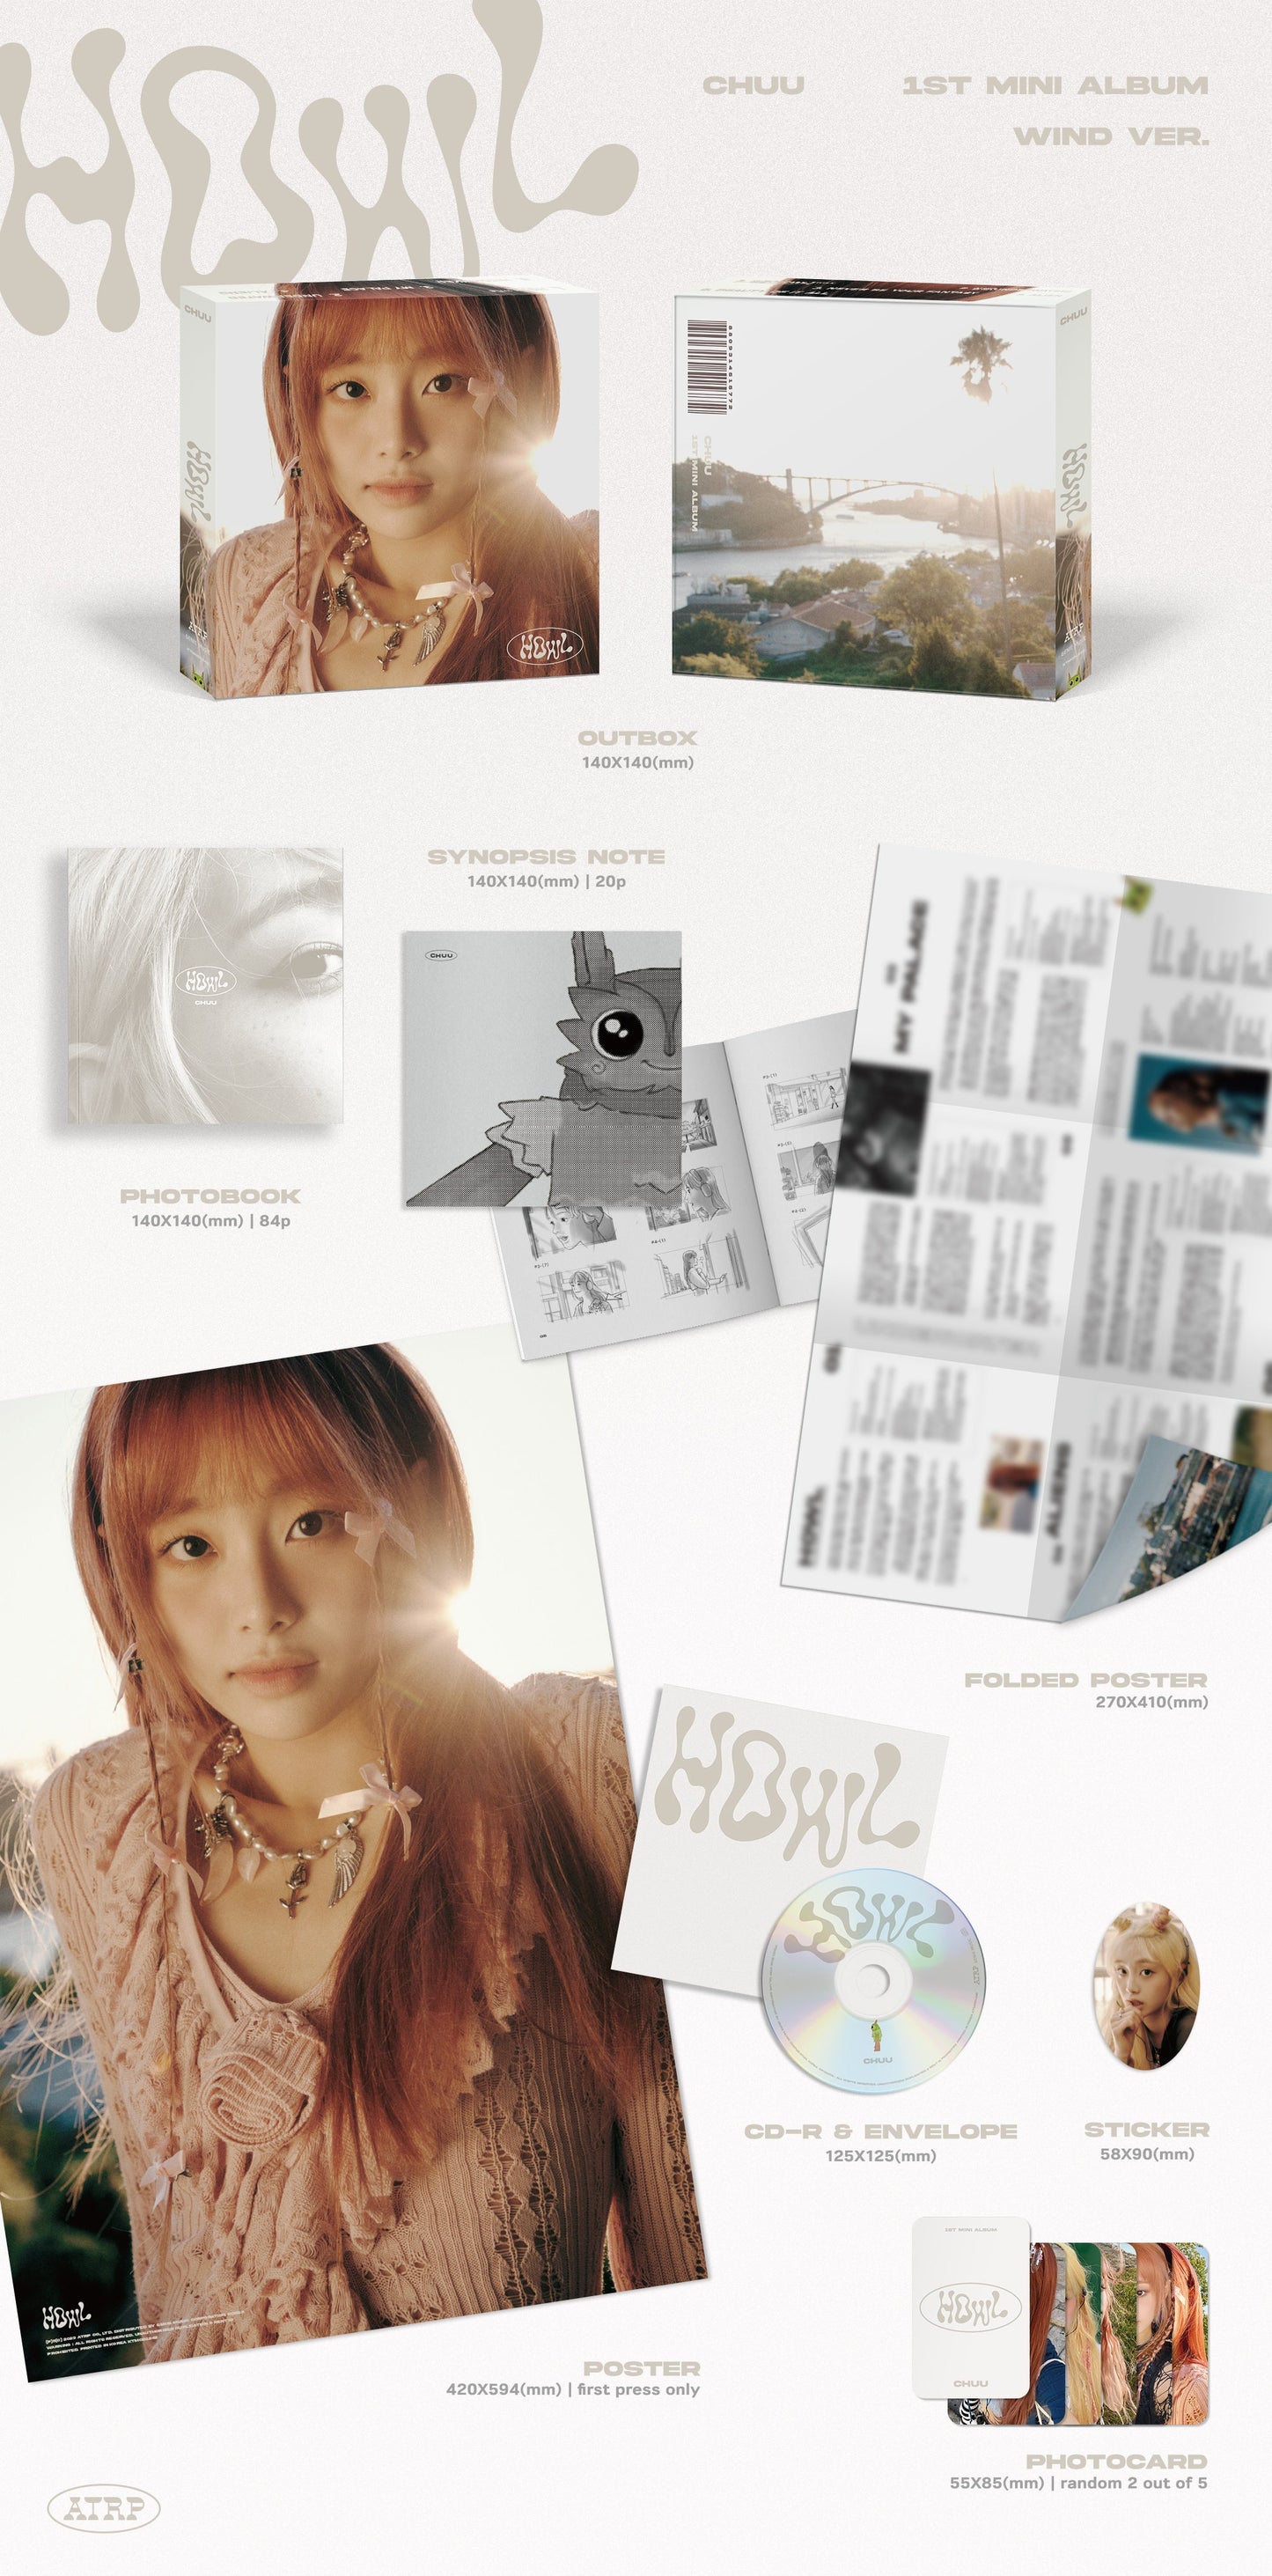 CHUU - 1st Mini-Album 'HOWL' + Kloud Fansign Exclusive Photocard